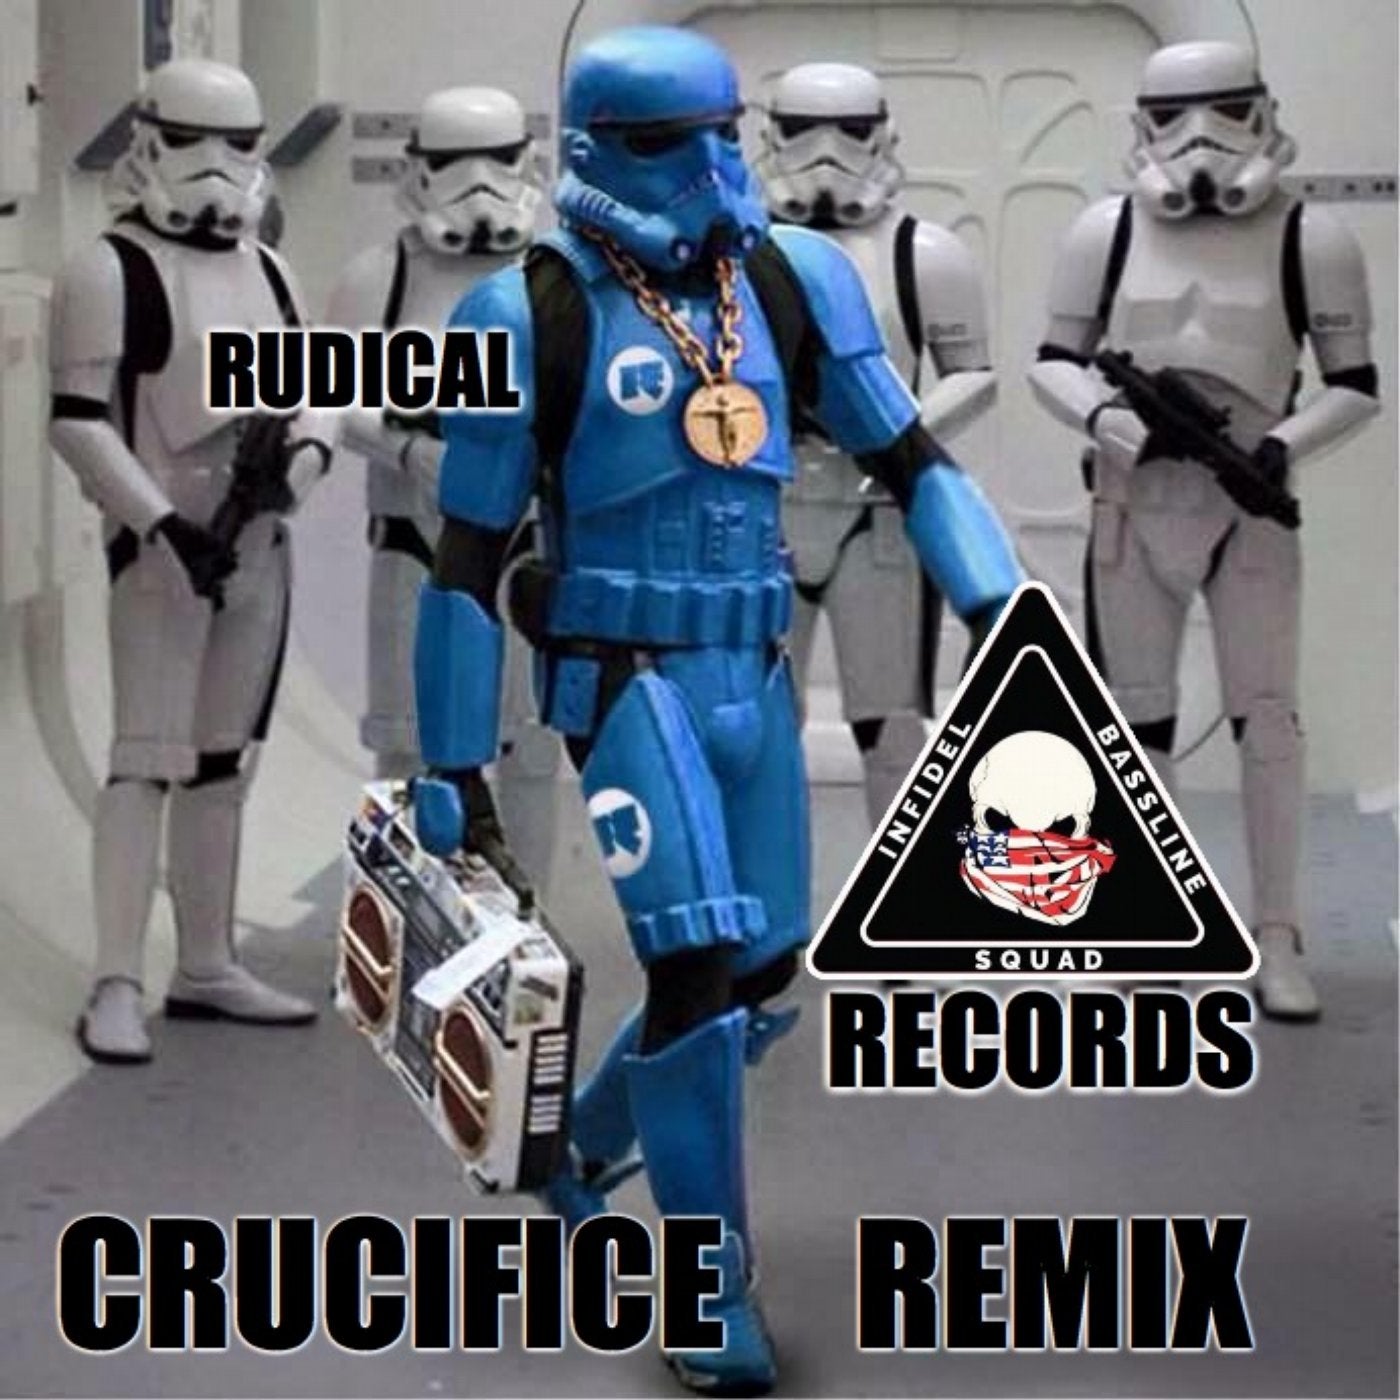 Crucifice Remix